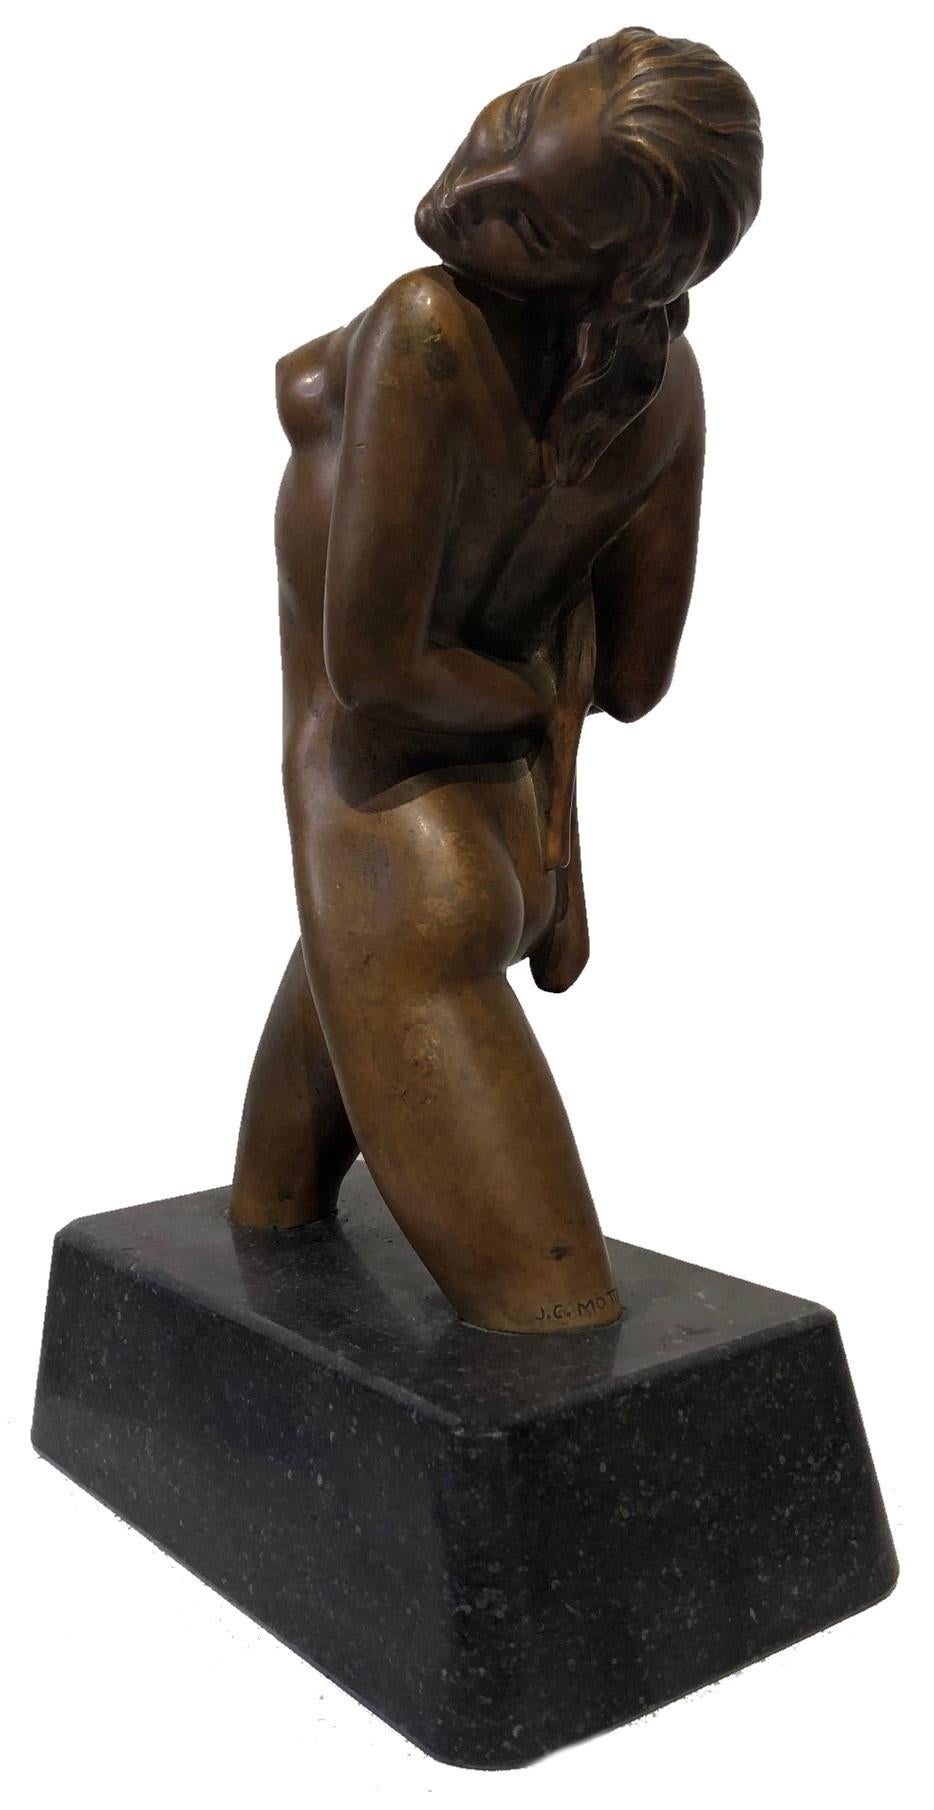 Early 20th Century American Art Deco Female Nude Bronze Sculpture by Joseph C. Motto, ca. 1920s  For Sale